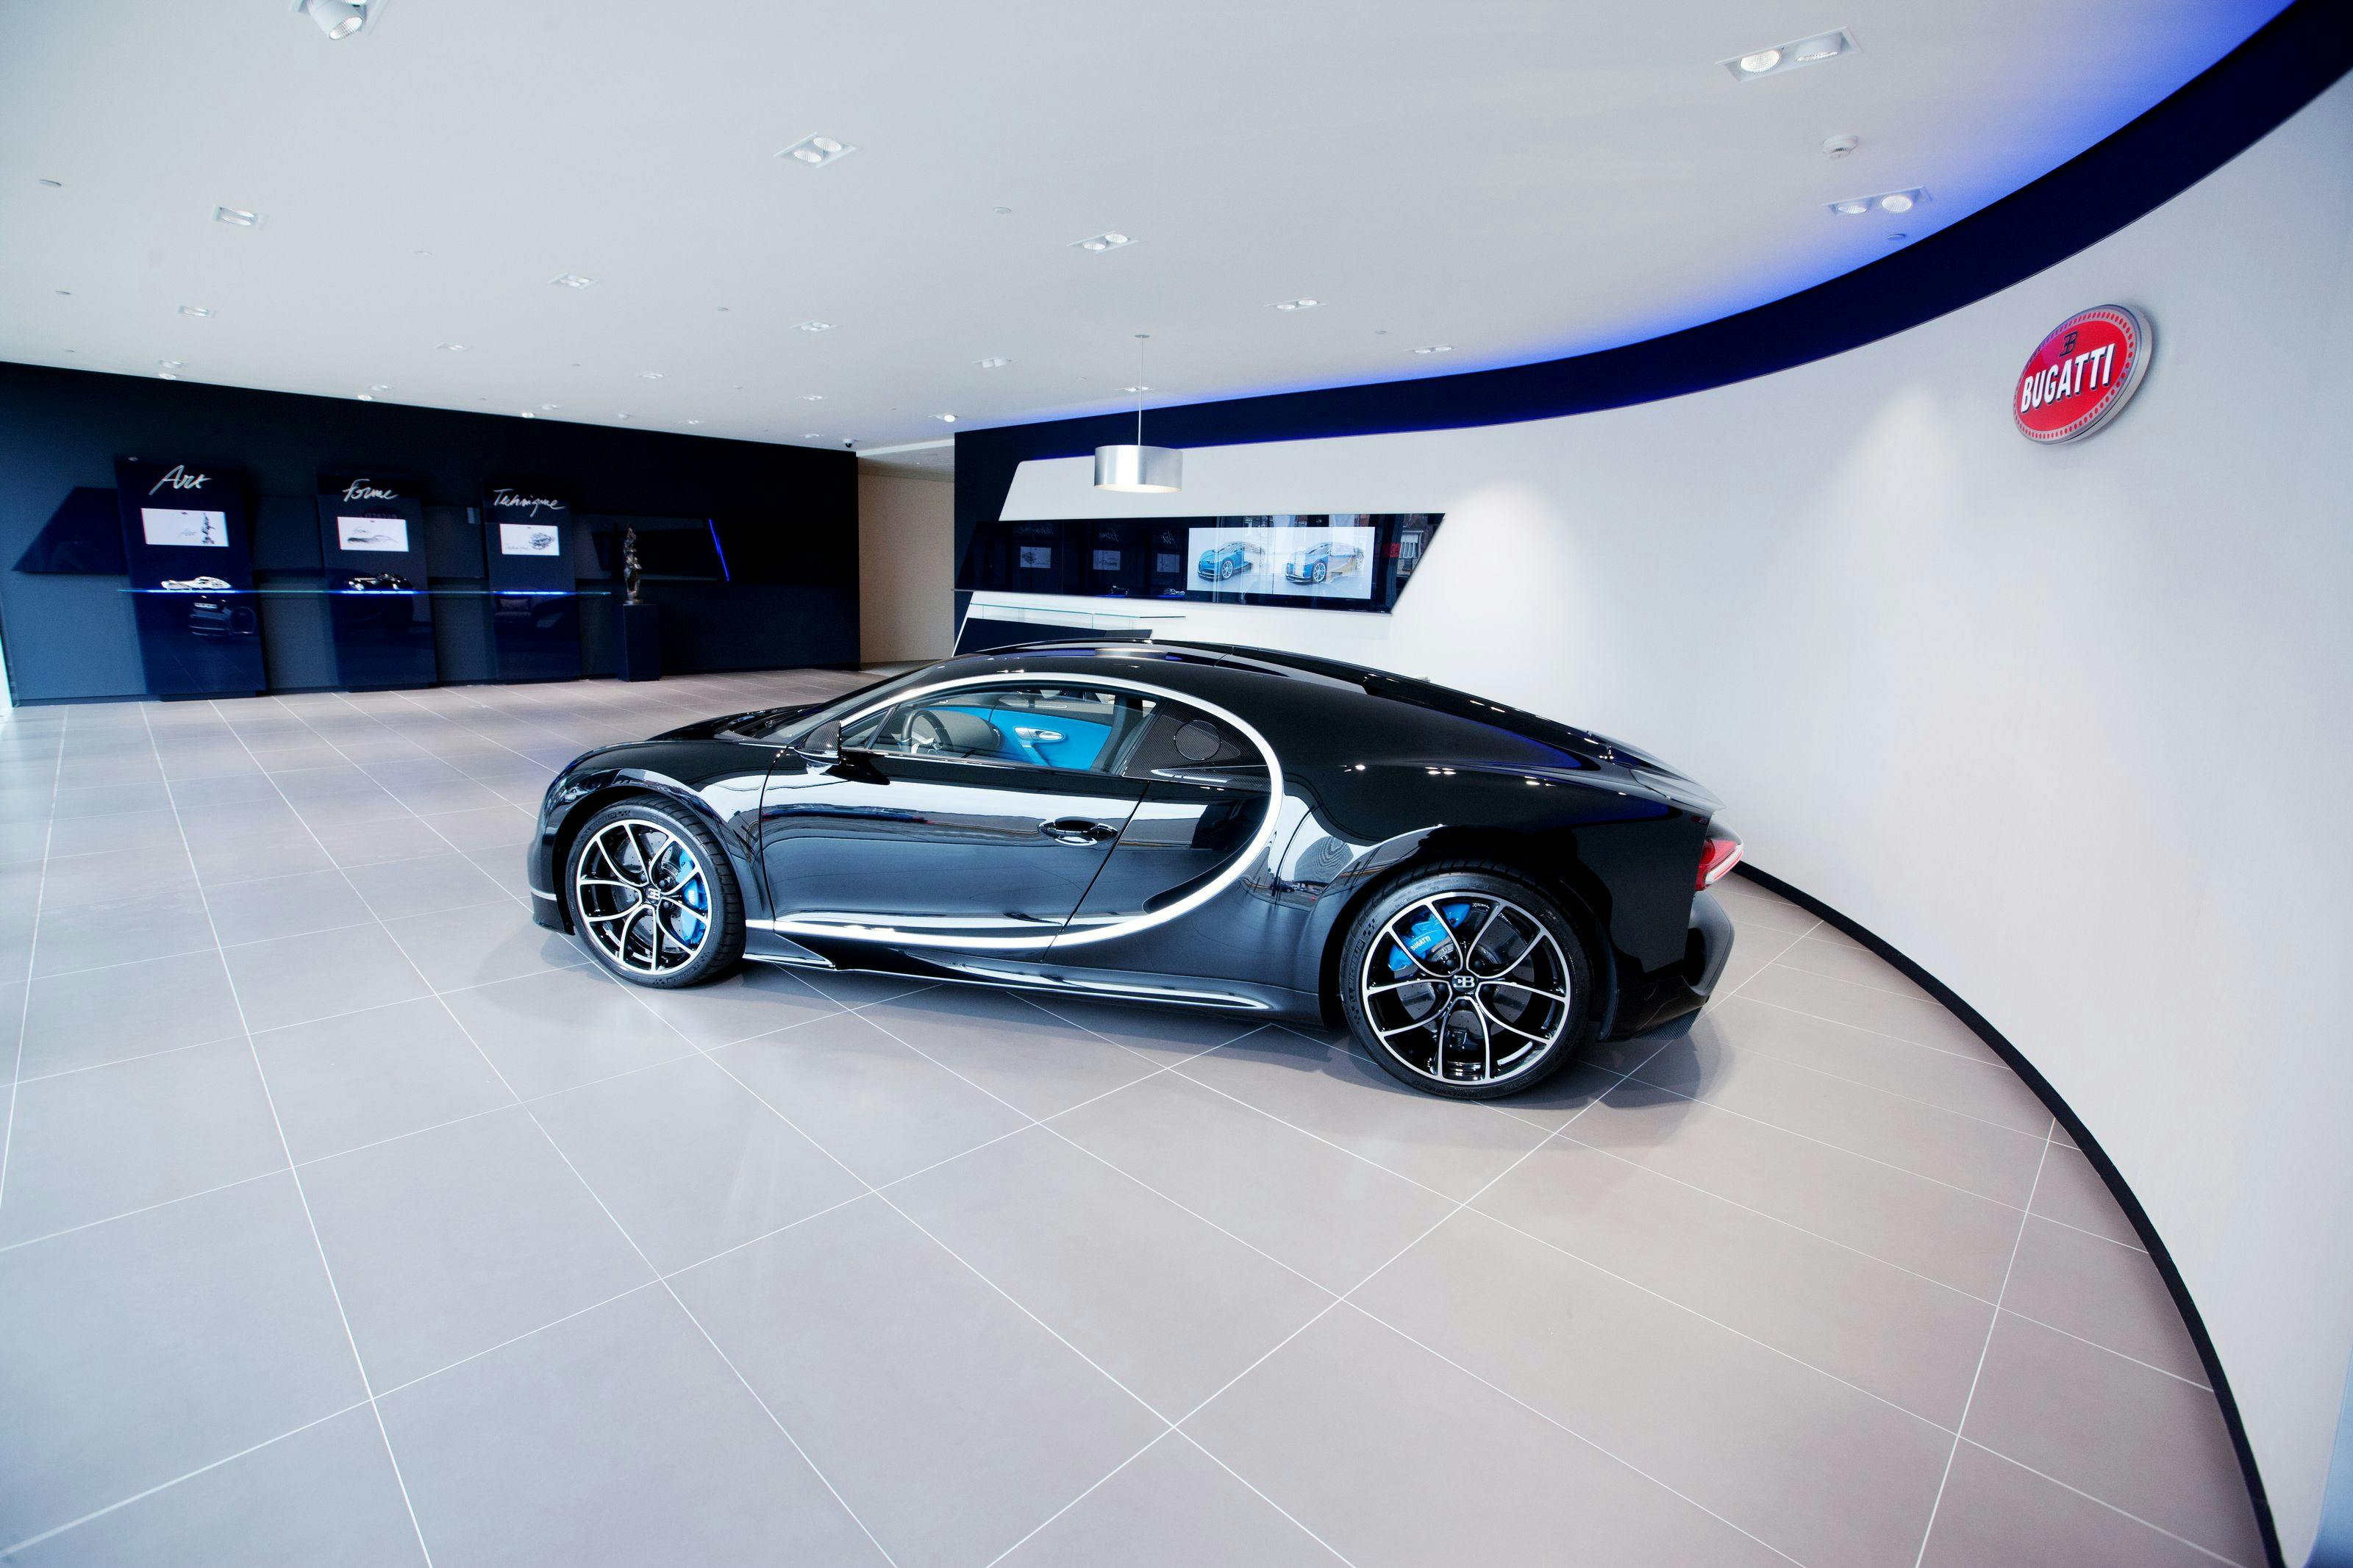 Bugatti Brussels opens redesigned showroom